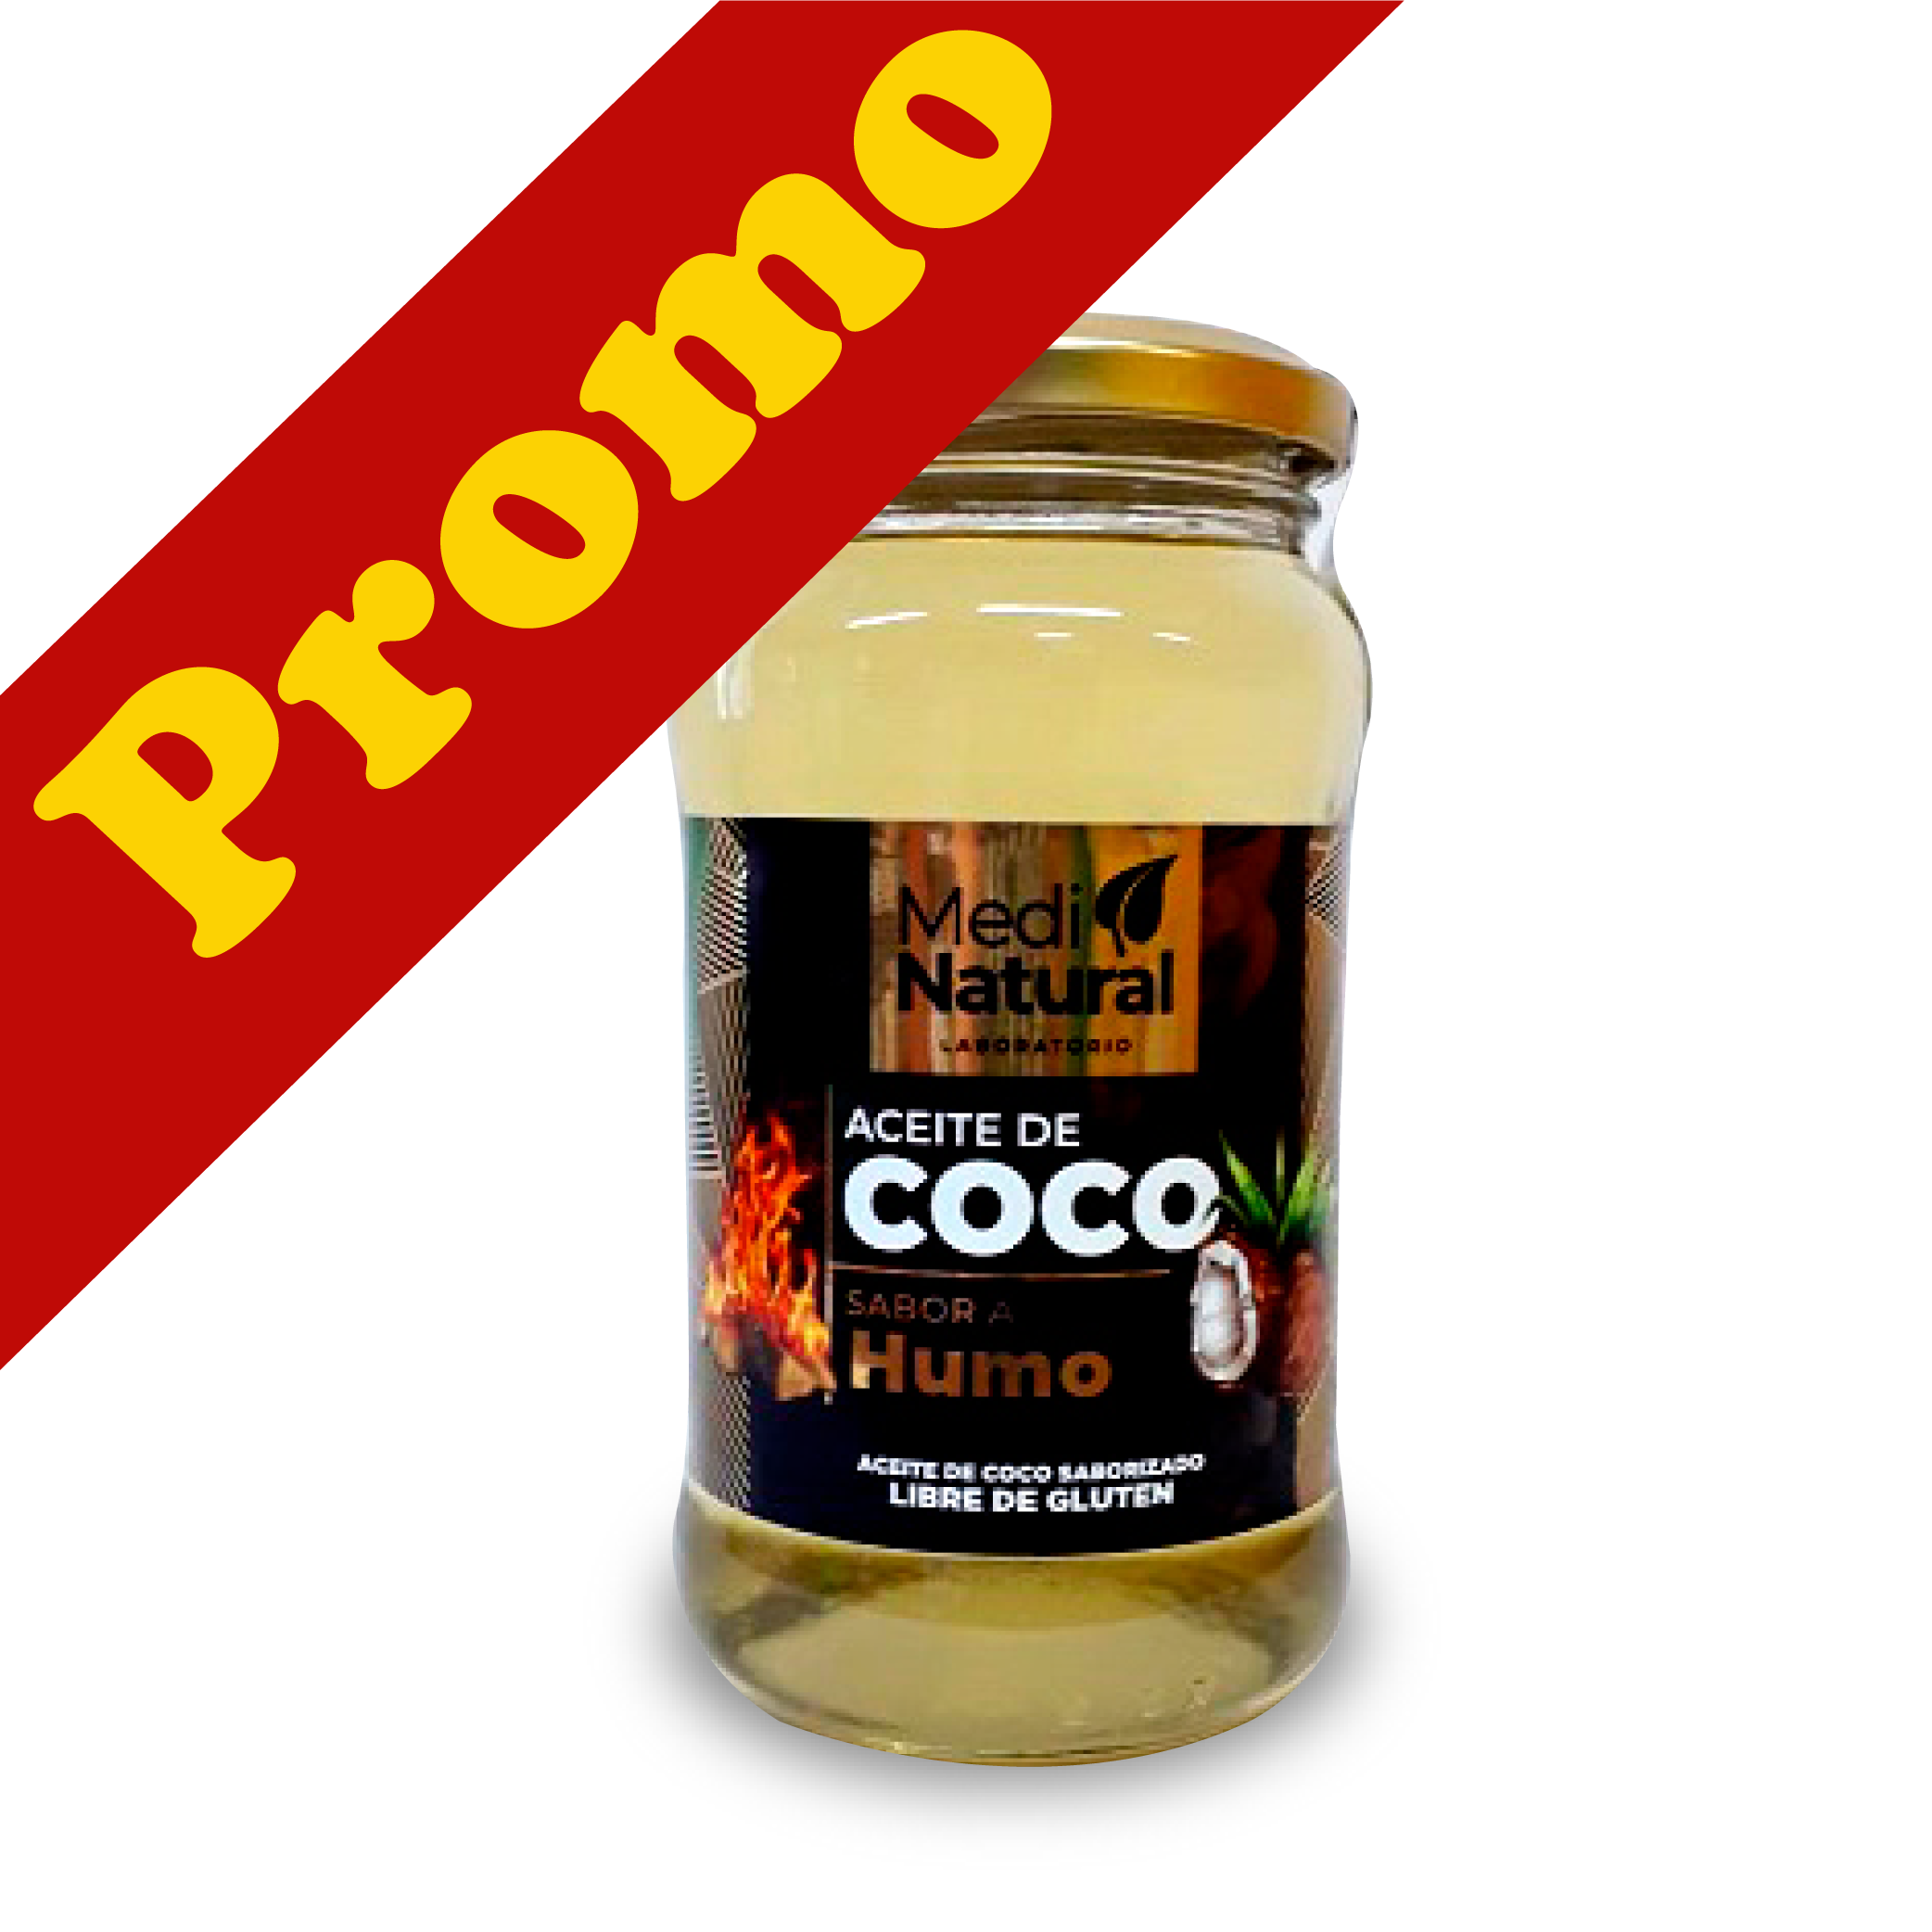 MediNatural- Aceite de coco neutro S/Humo PROMO 3 x 360 cc